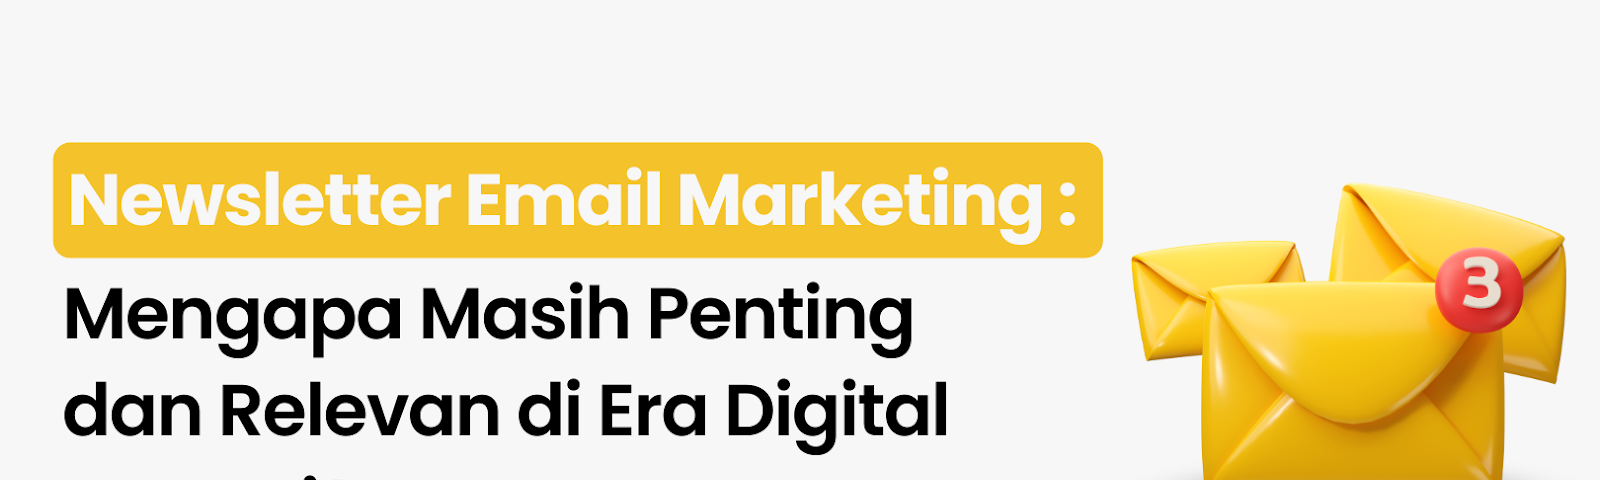 Newsletter Email Marketing